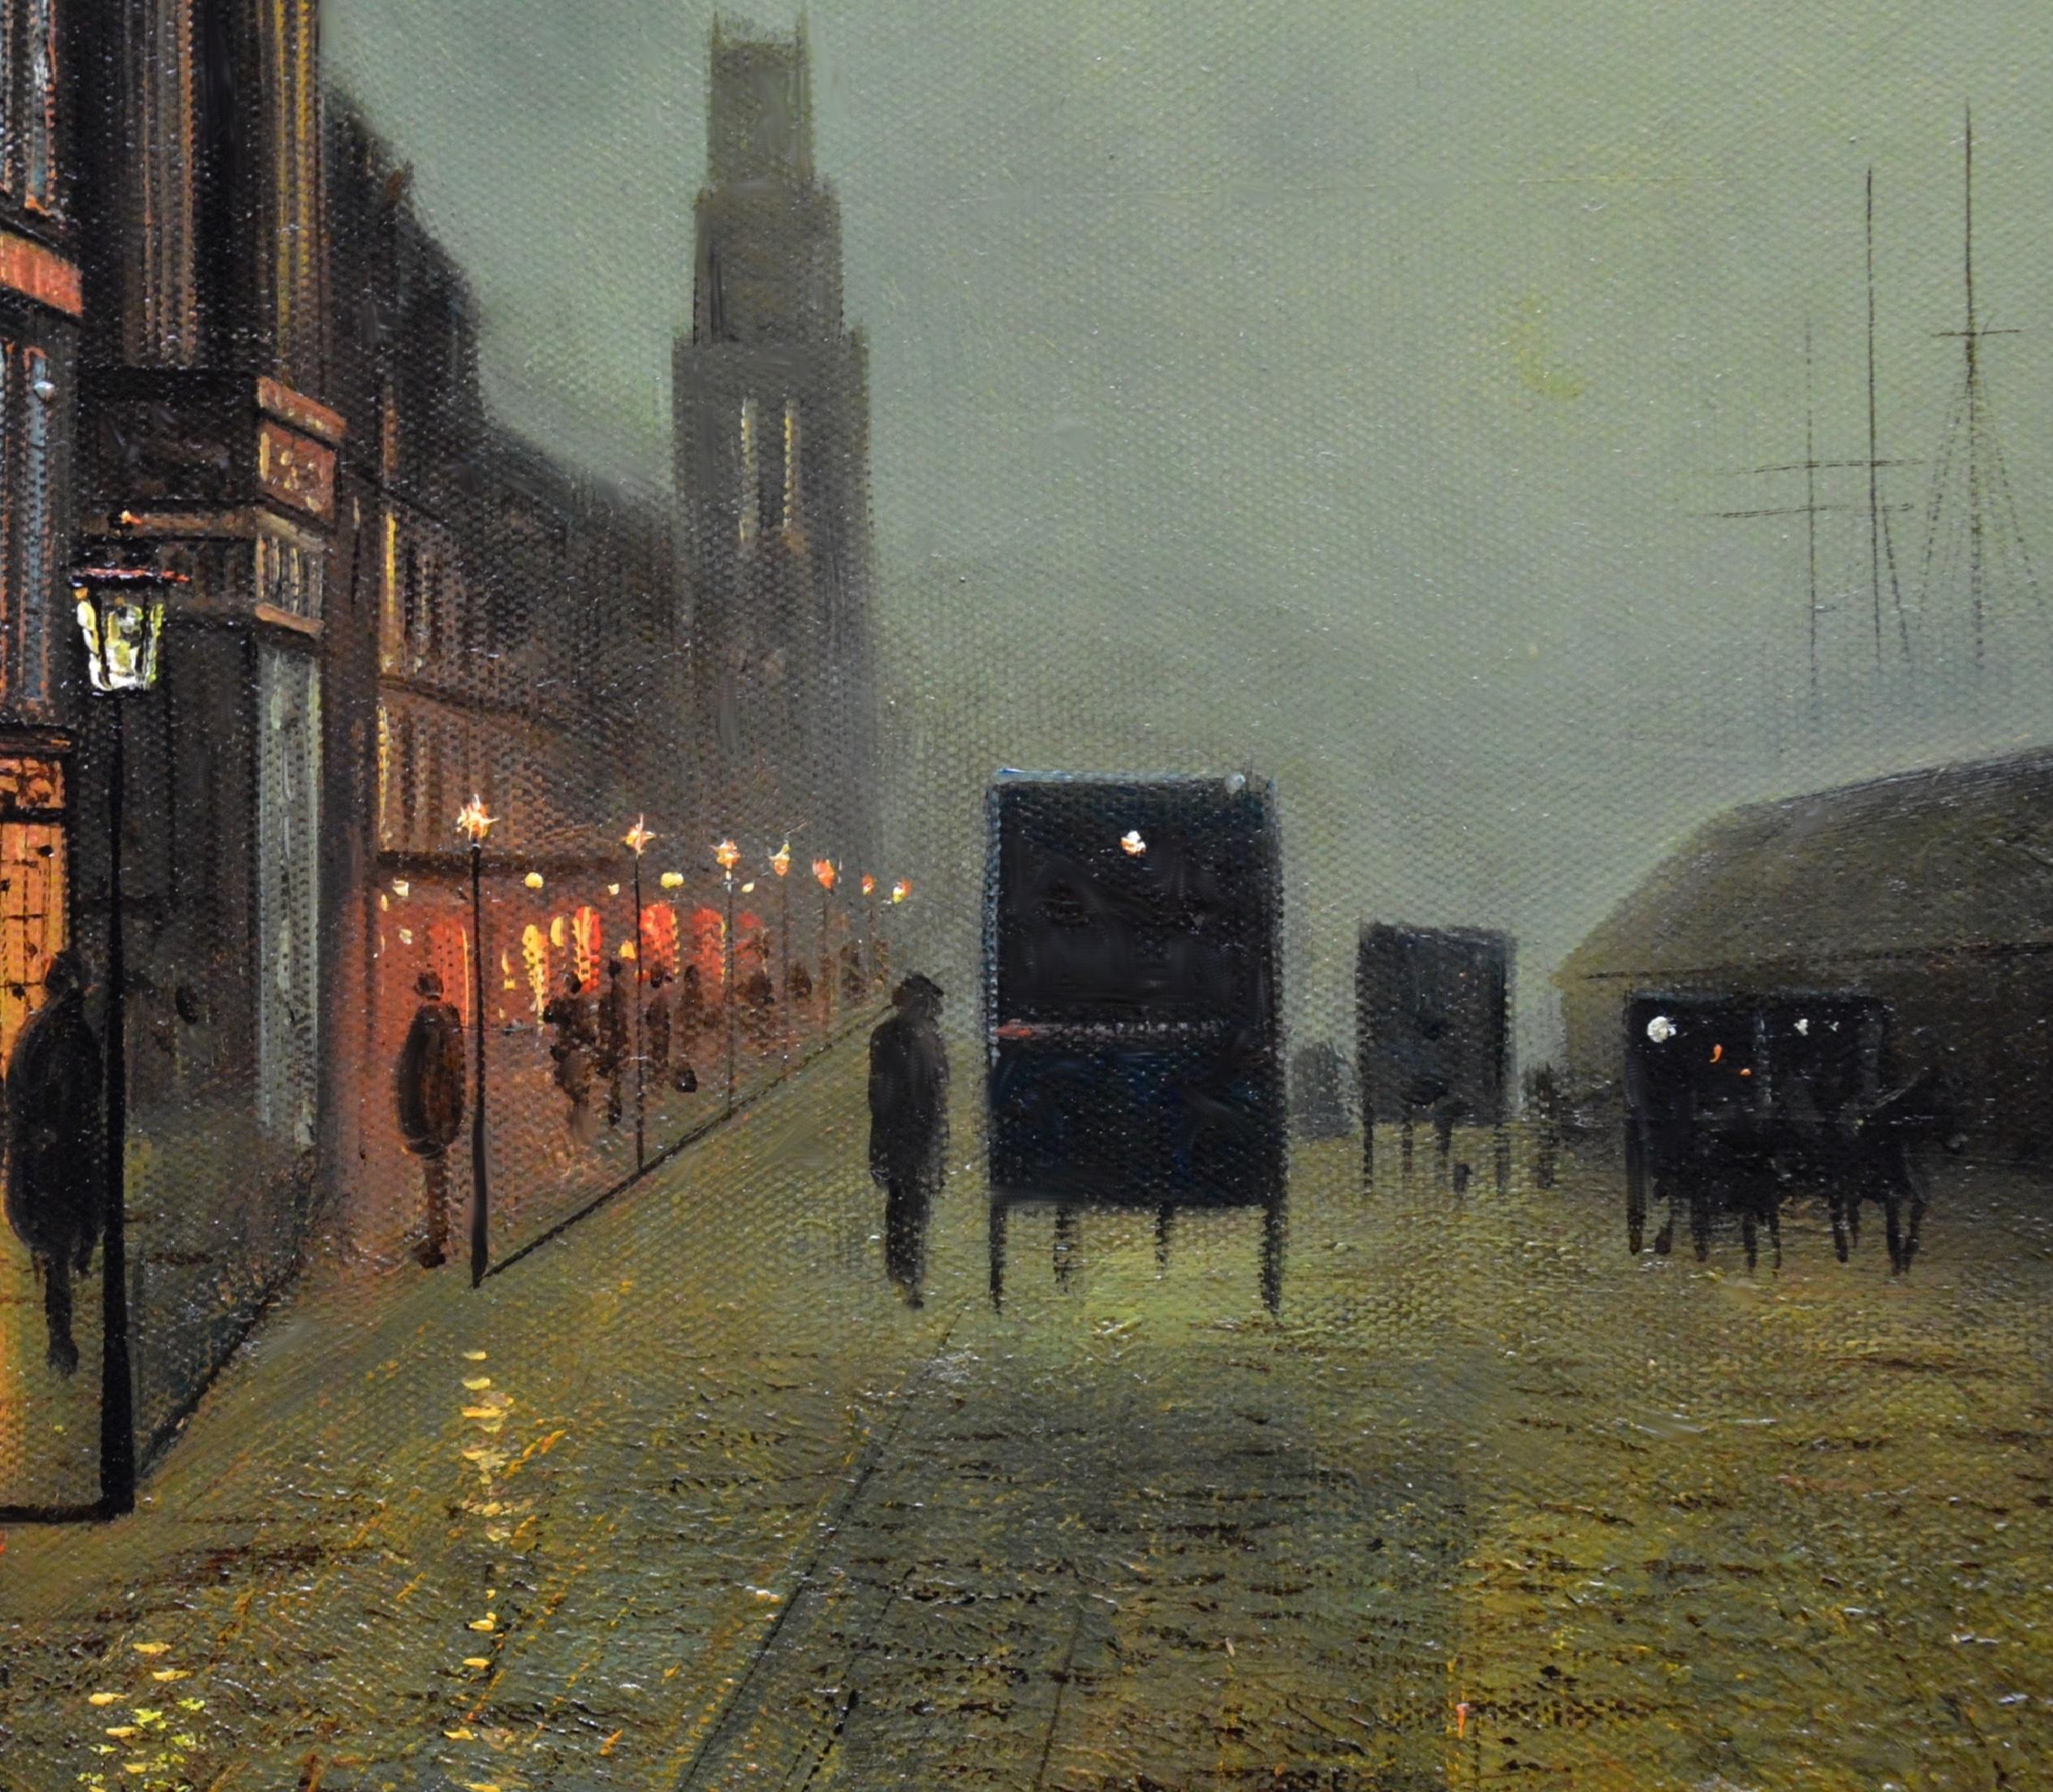 Glasgow Docks - Moonlight Nocturne Landscape - Pupil of Atkinson Grimshaw - Brown Landscape Painting by Walter Linsley Meegan